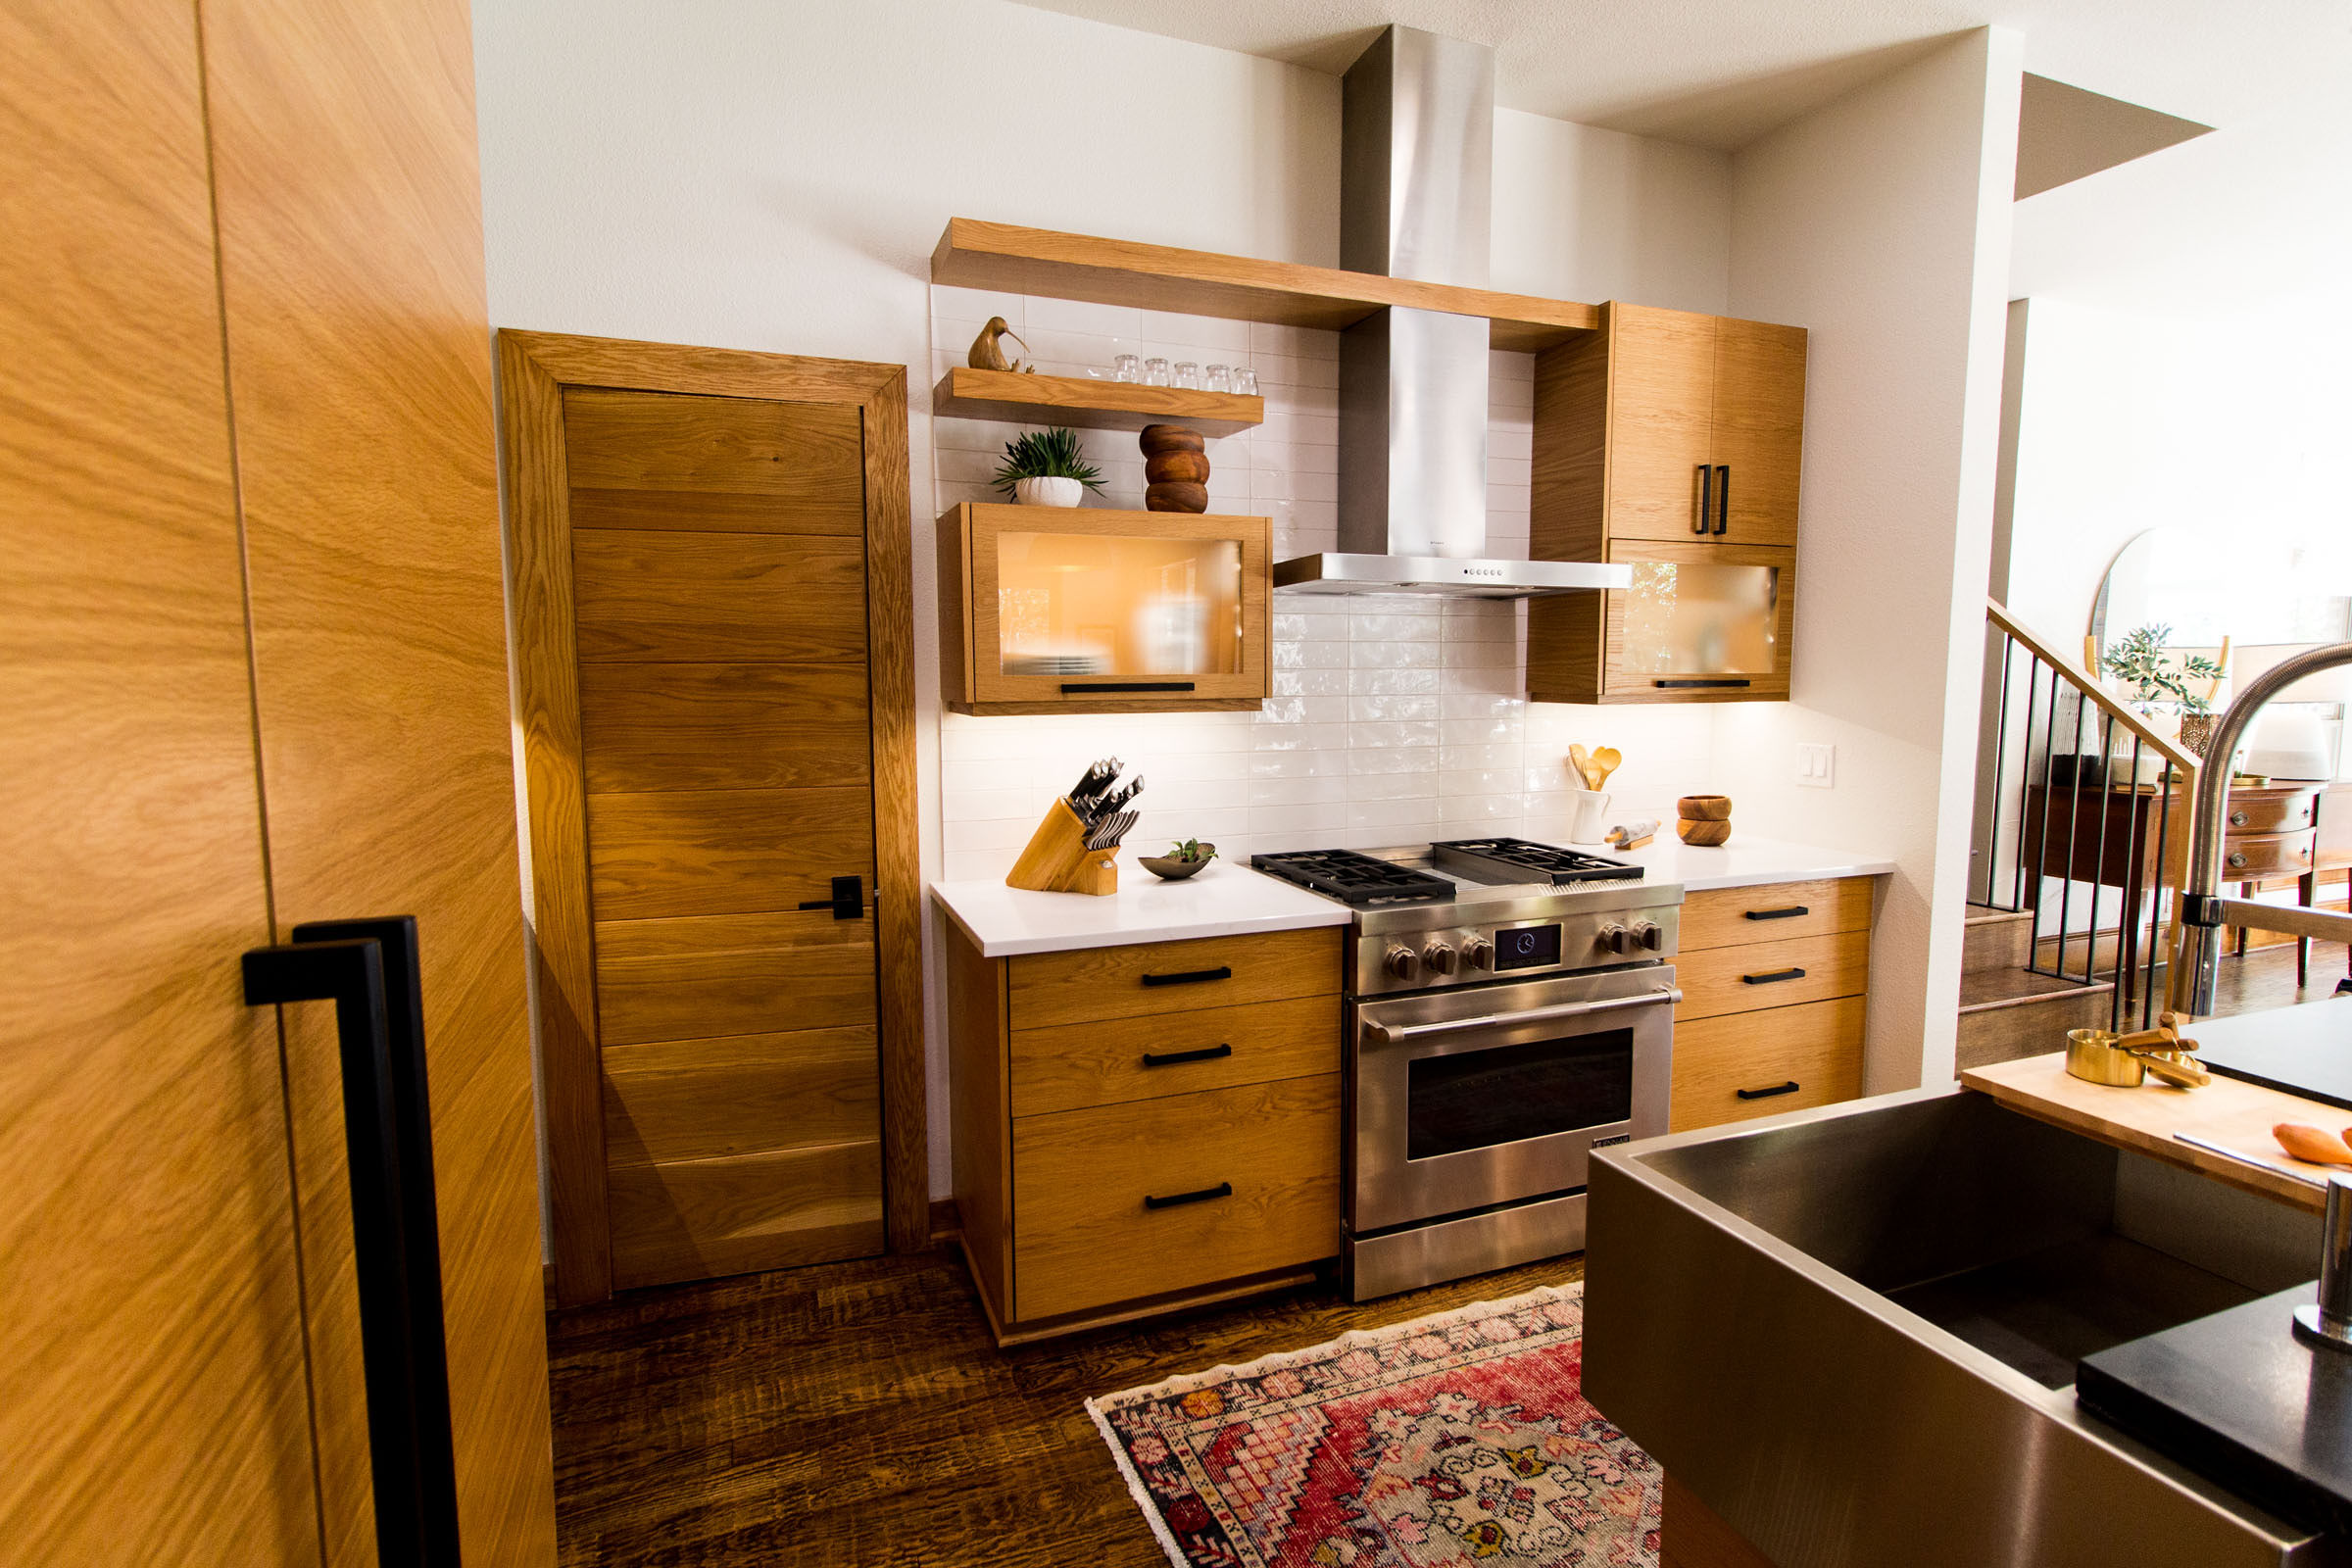 Stainless steel cooktop, blonde cabinets, scandinavian decor